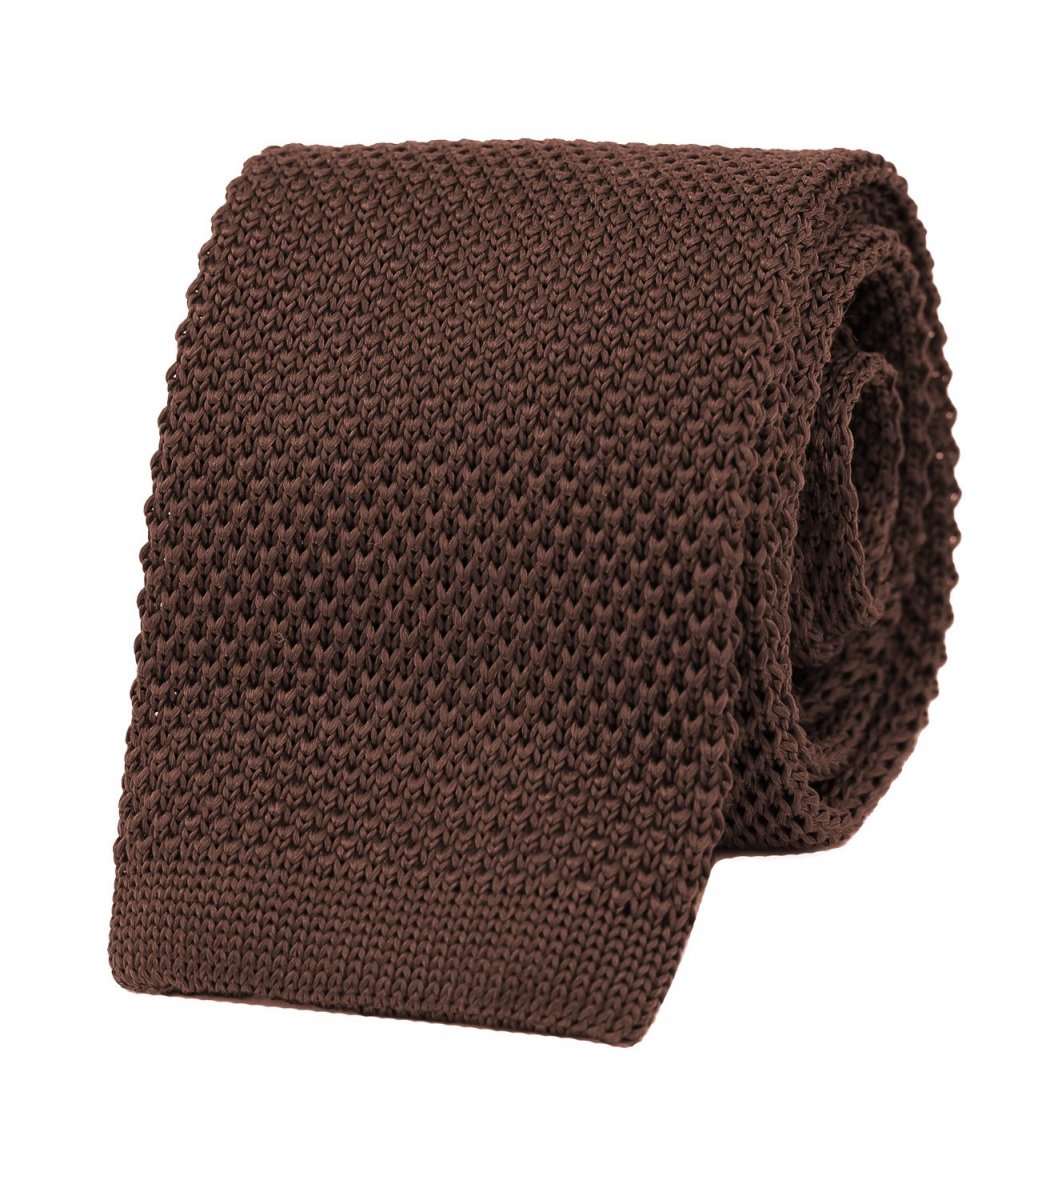 Chocolate brown knitted tie | bubibubi.eu